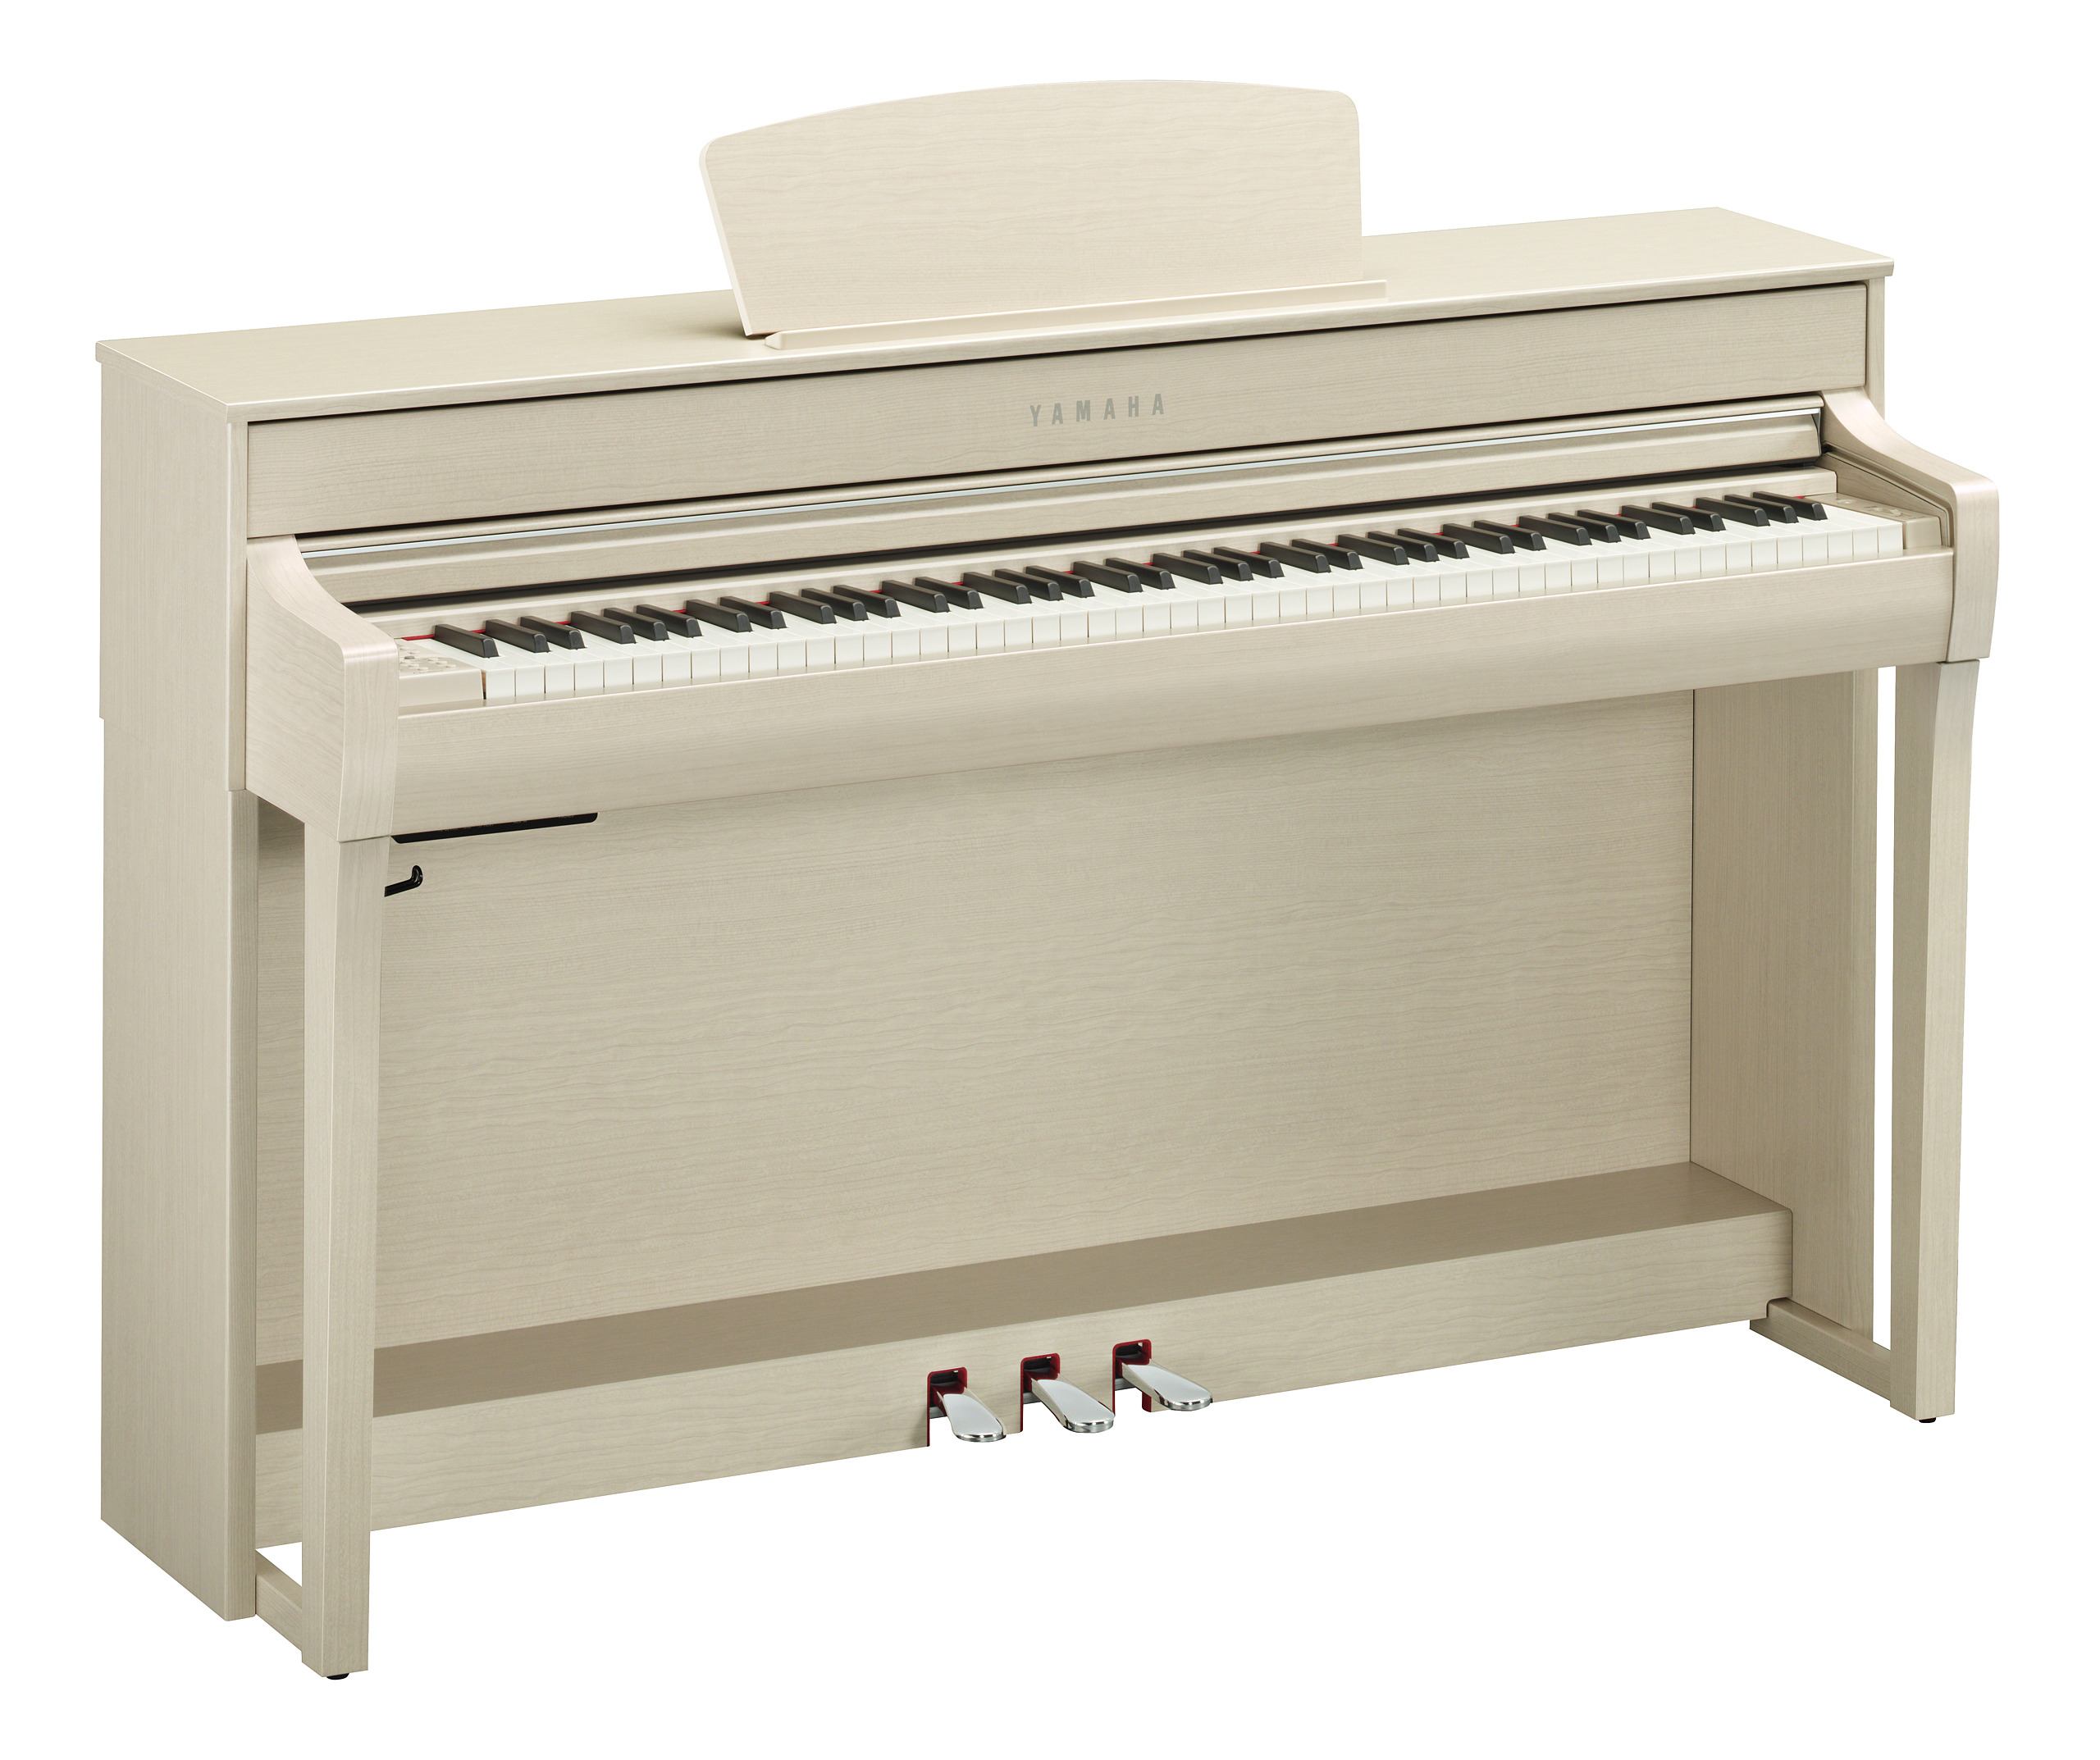 Yamaha Clp735wa - Digital piano with stand - Variation 1